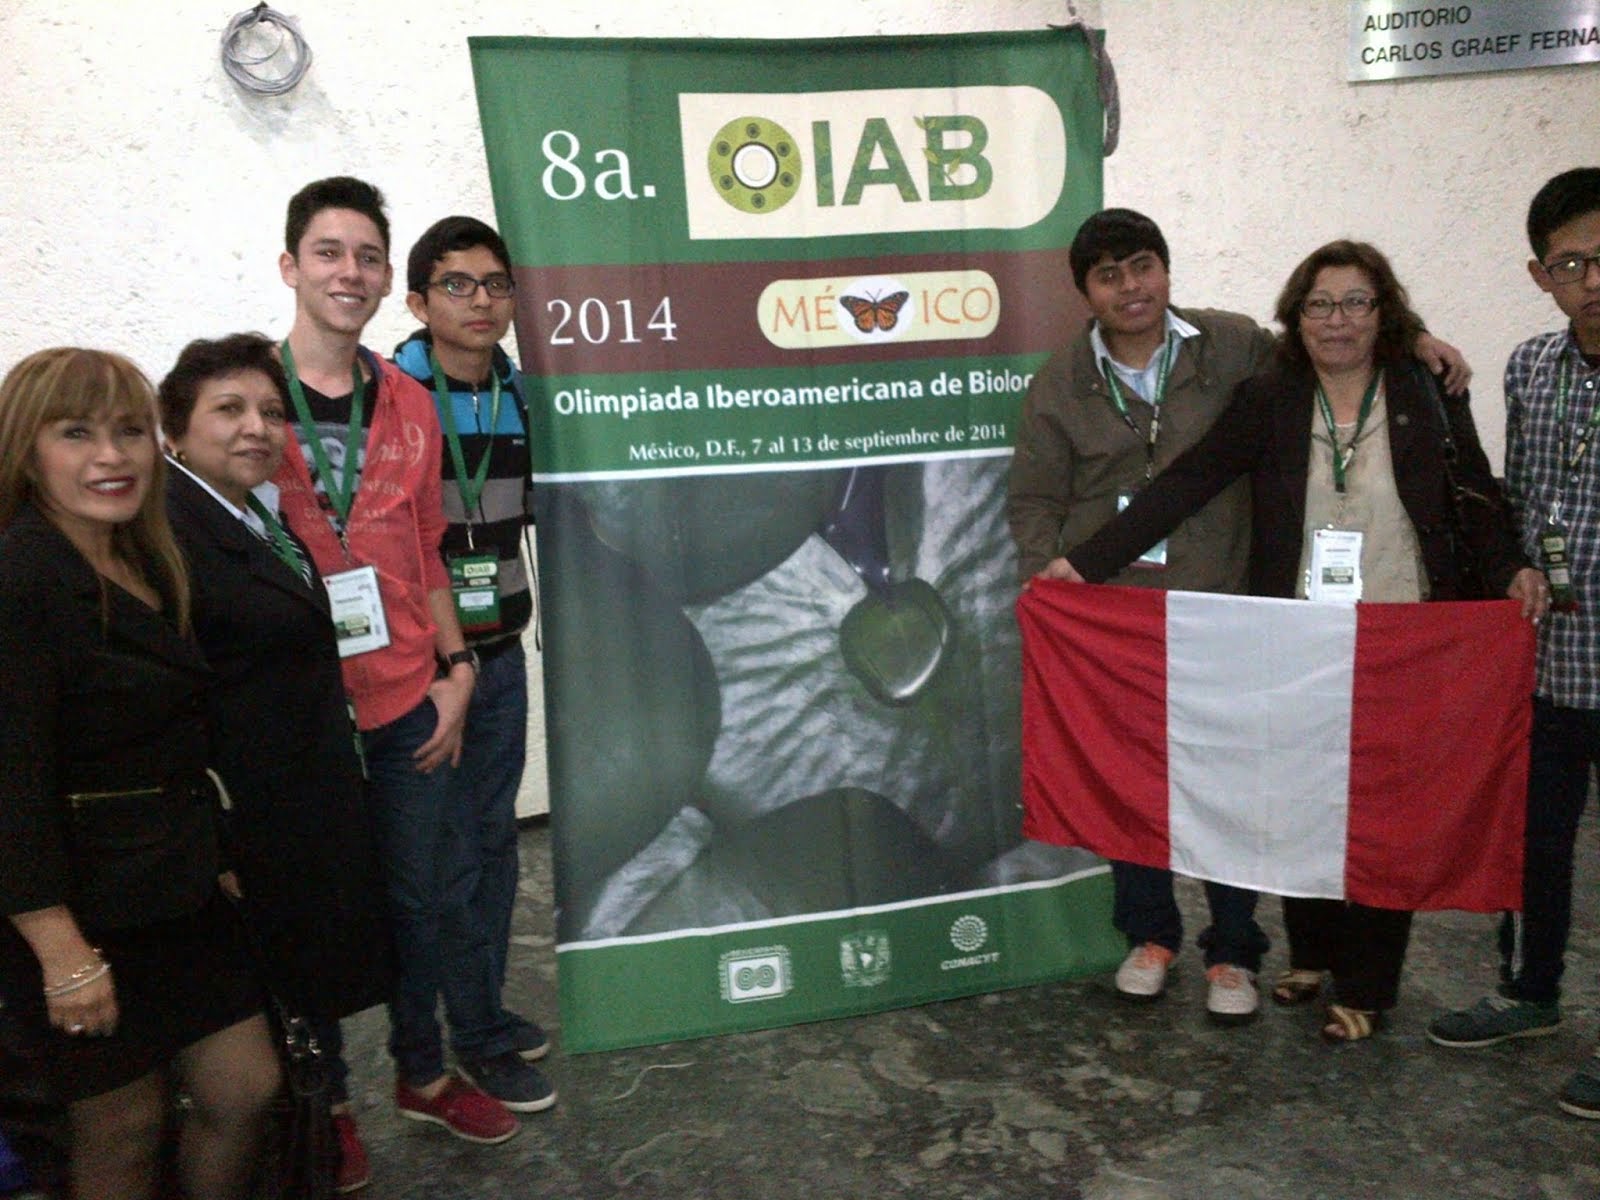 OCTAVA OLIMPIADA IBEROAMERICANA DE BIOLOGIA OIAB MEXICO 2014